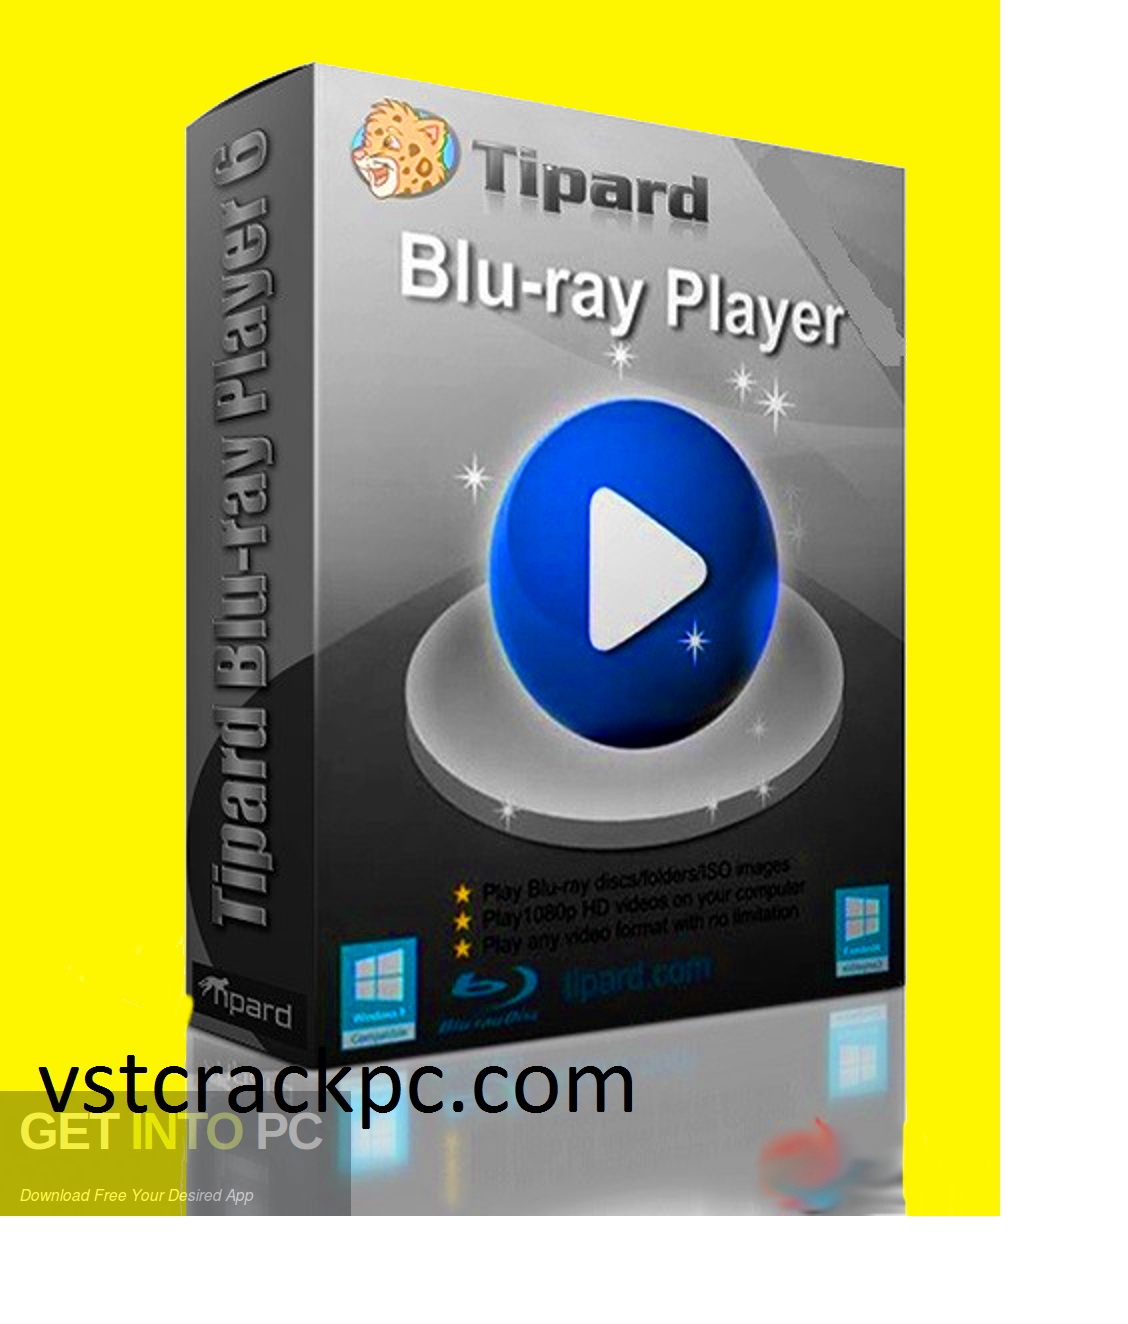 Tipard Blu-ray Player Crack 10.3.79.0 